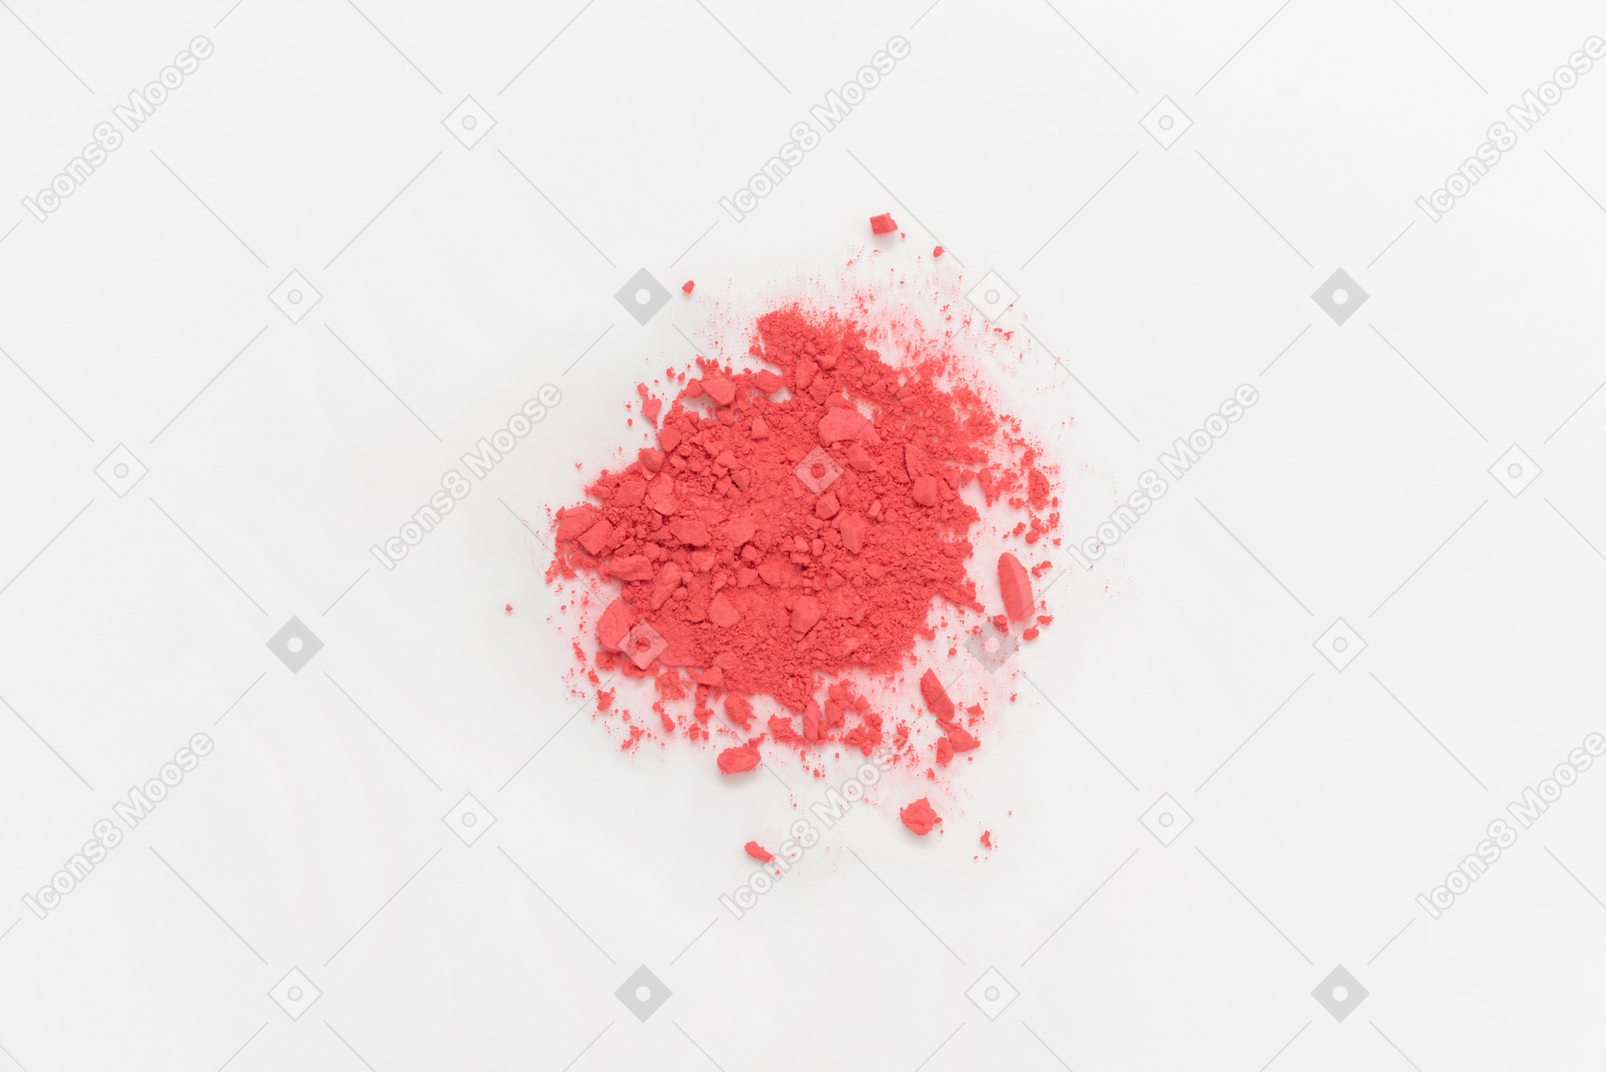 Red powder on white background